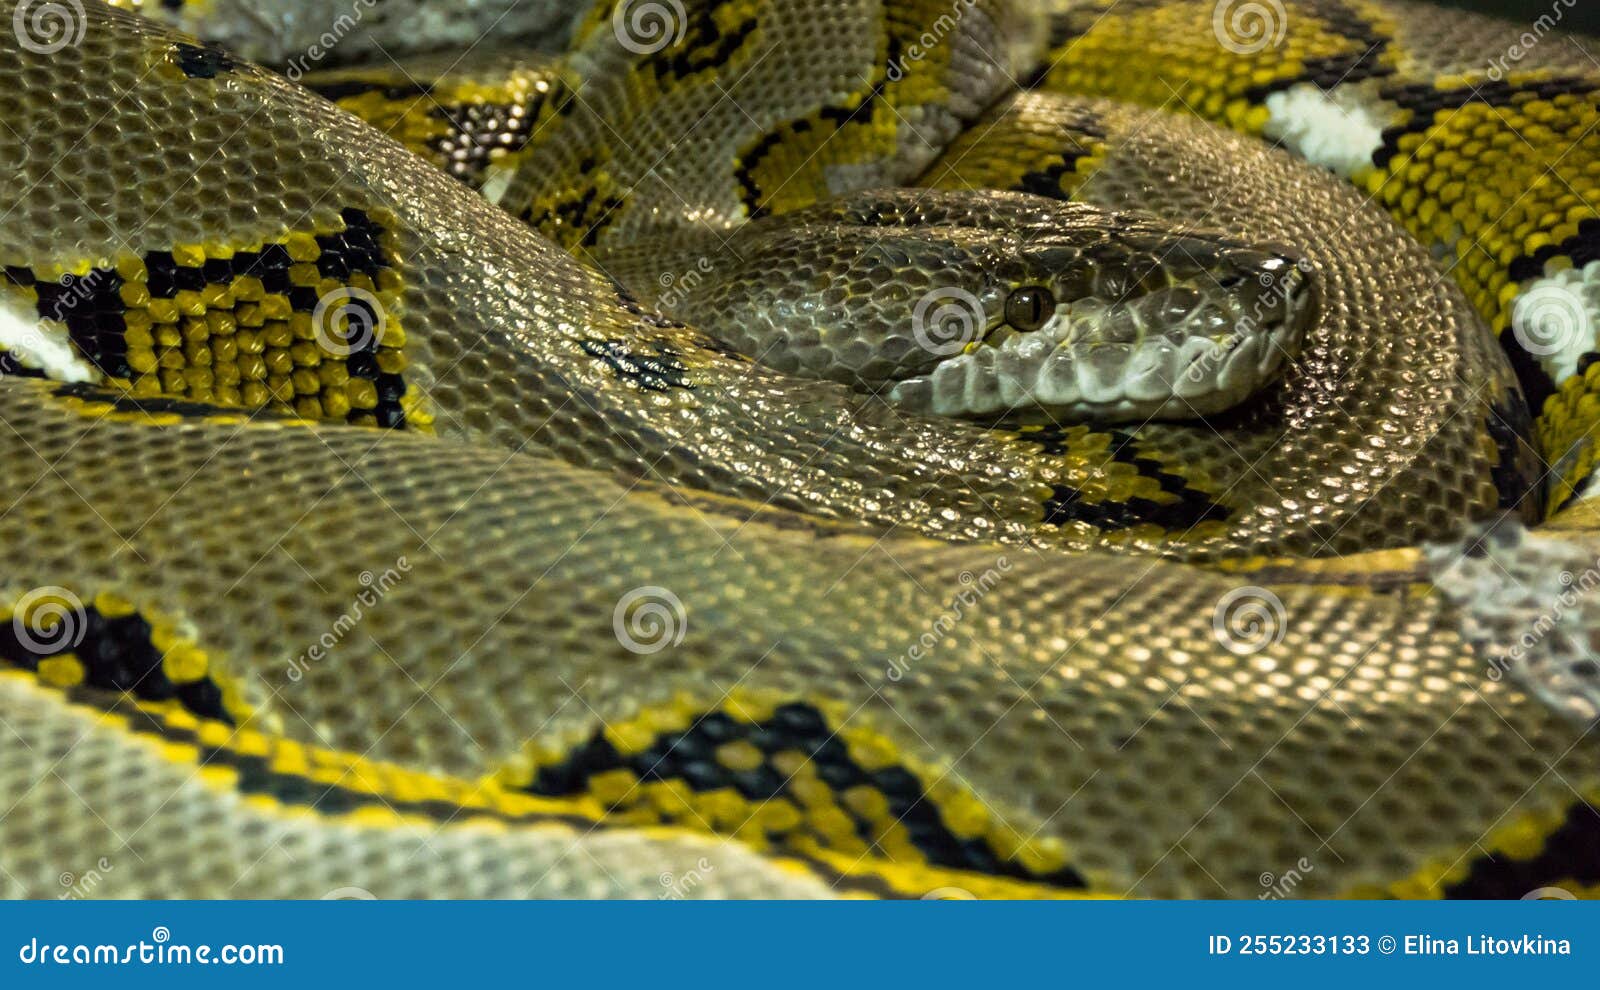 python snake background